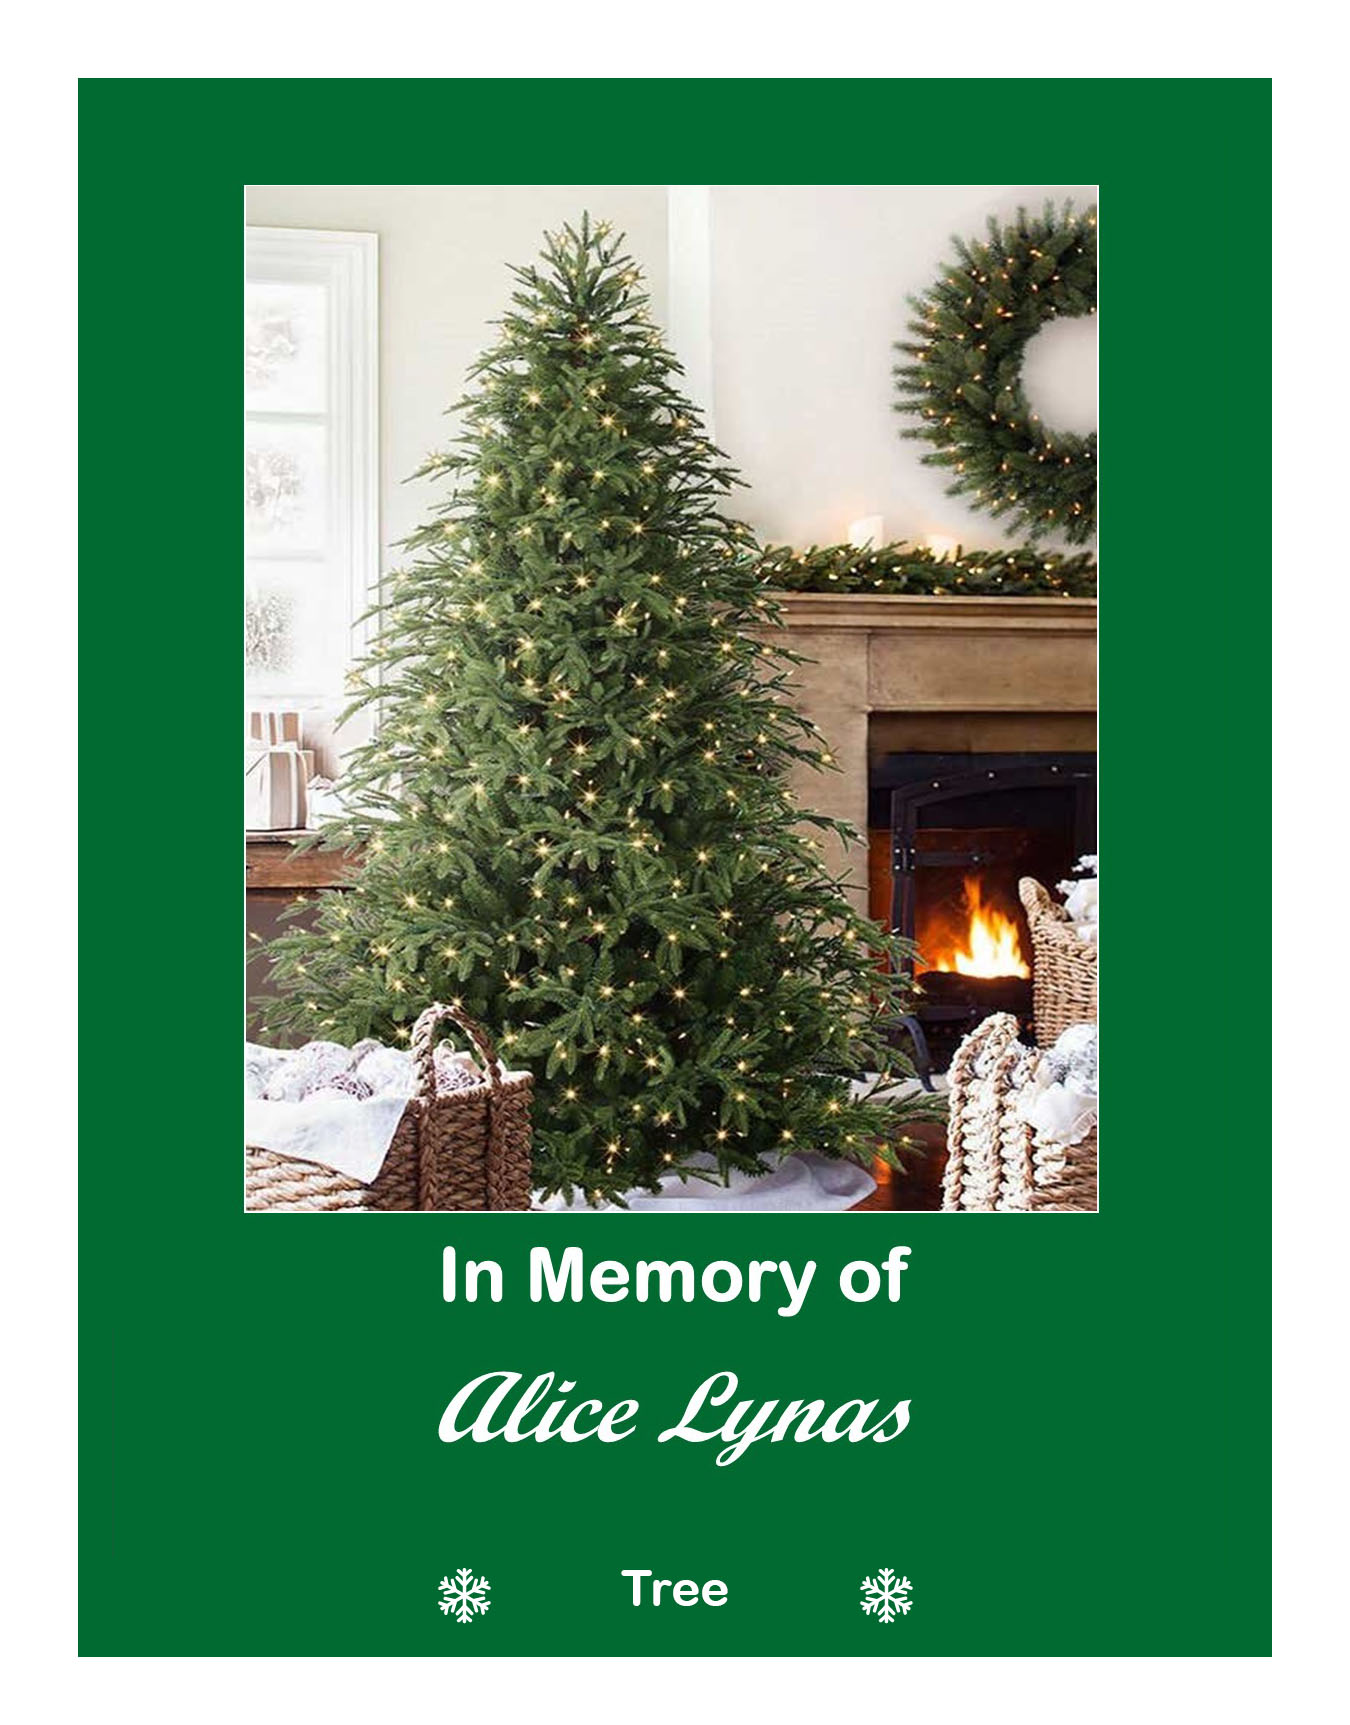 Tree in memory of Alice Lynas